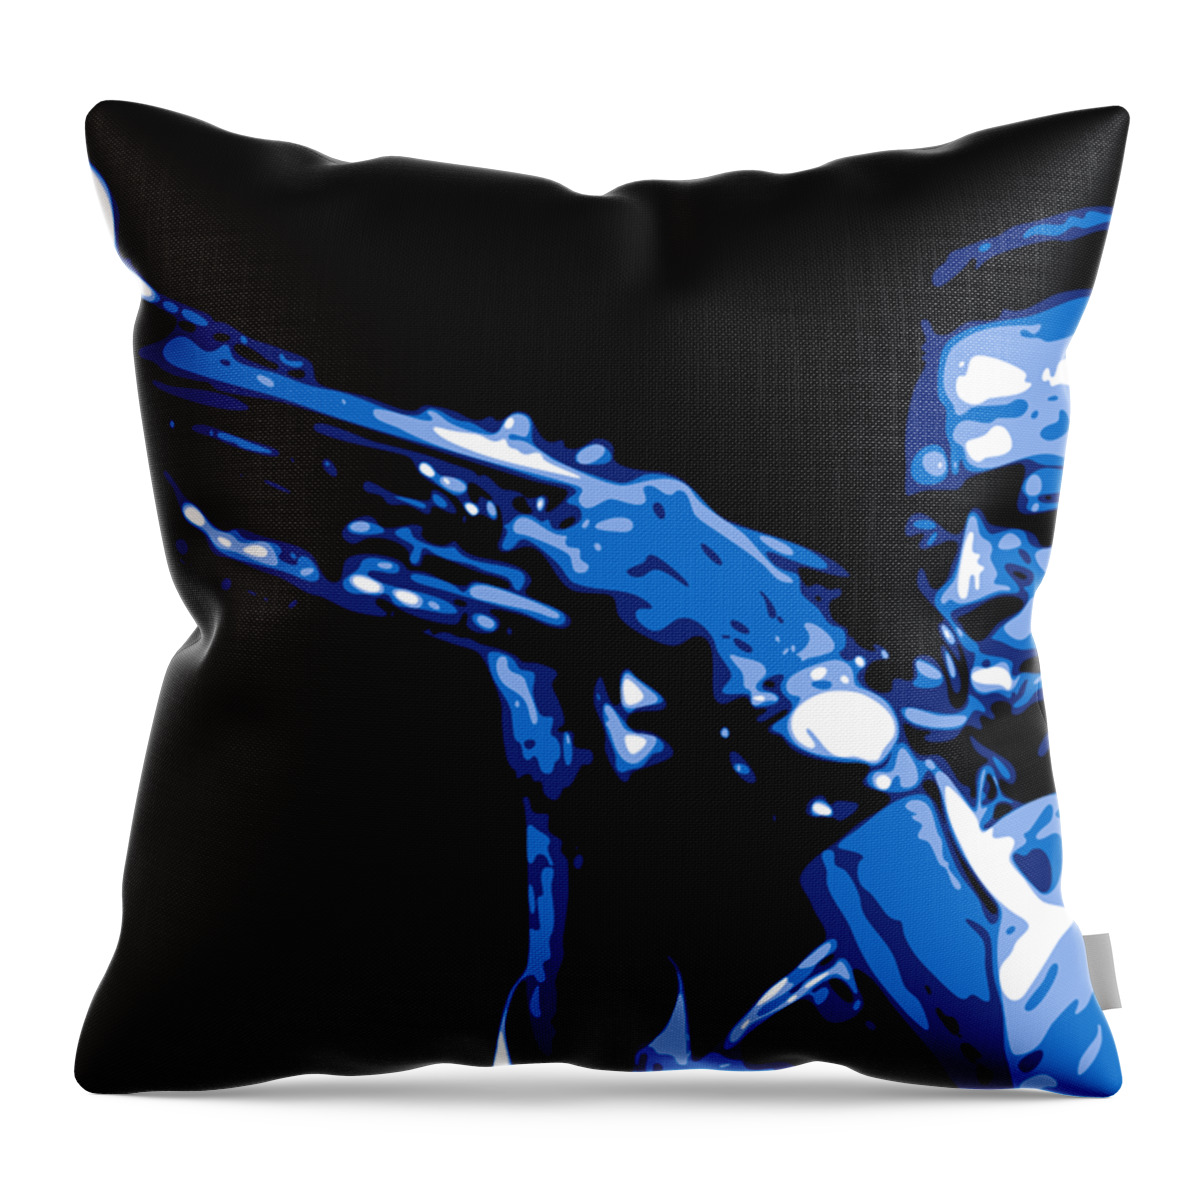 Miles Davis Throw Pillow featuring the digital art Miles Davis by DB Artist